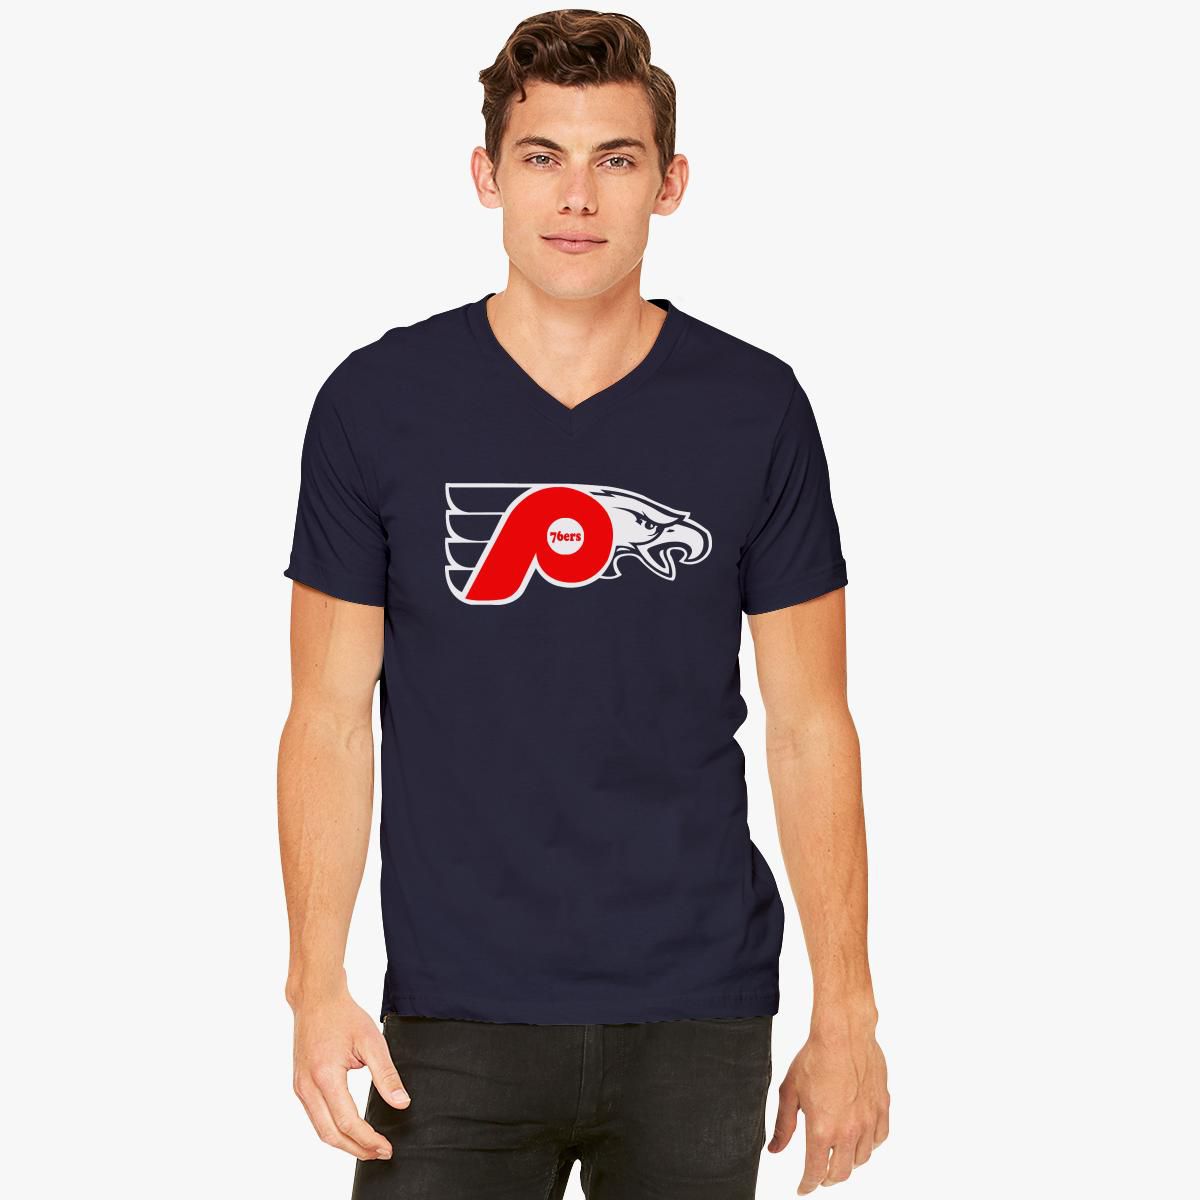 76ers Phillies Flyers Eagles V-Neck T-shirt - Customon